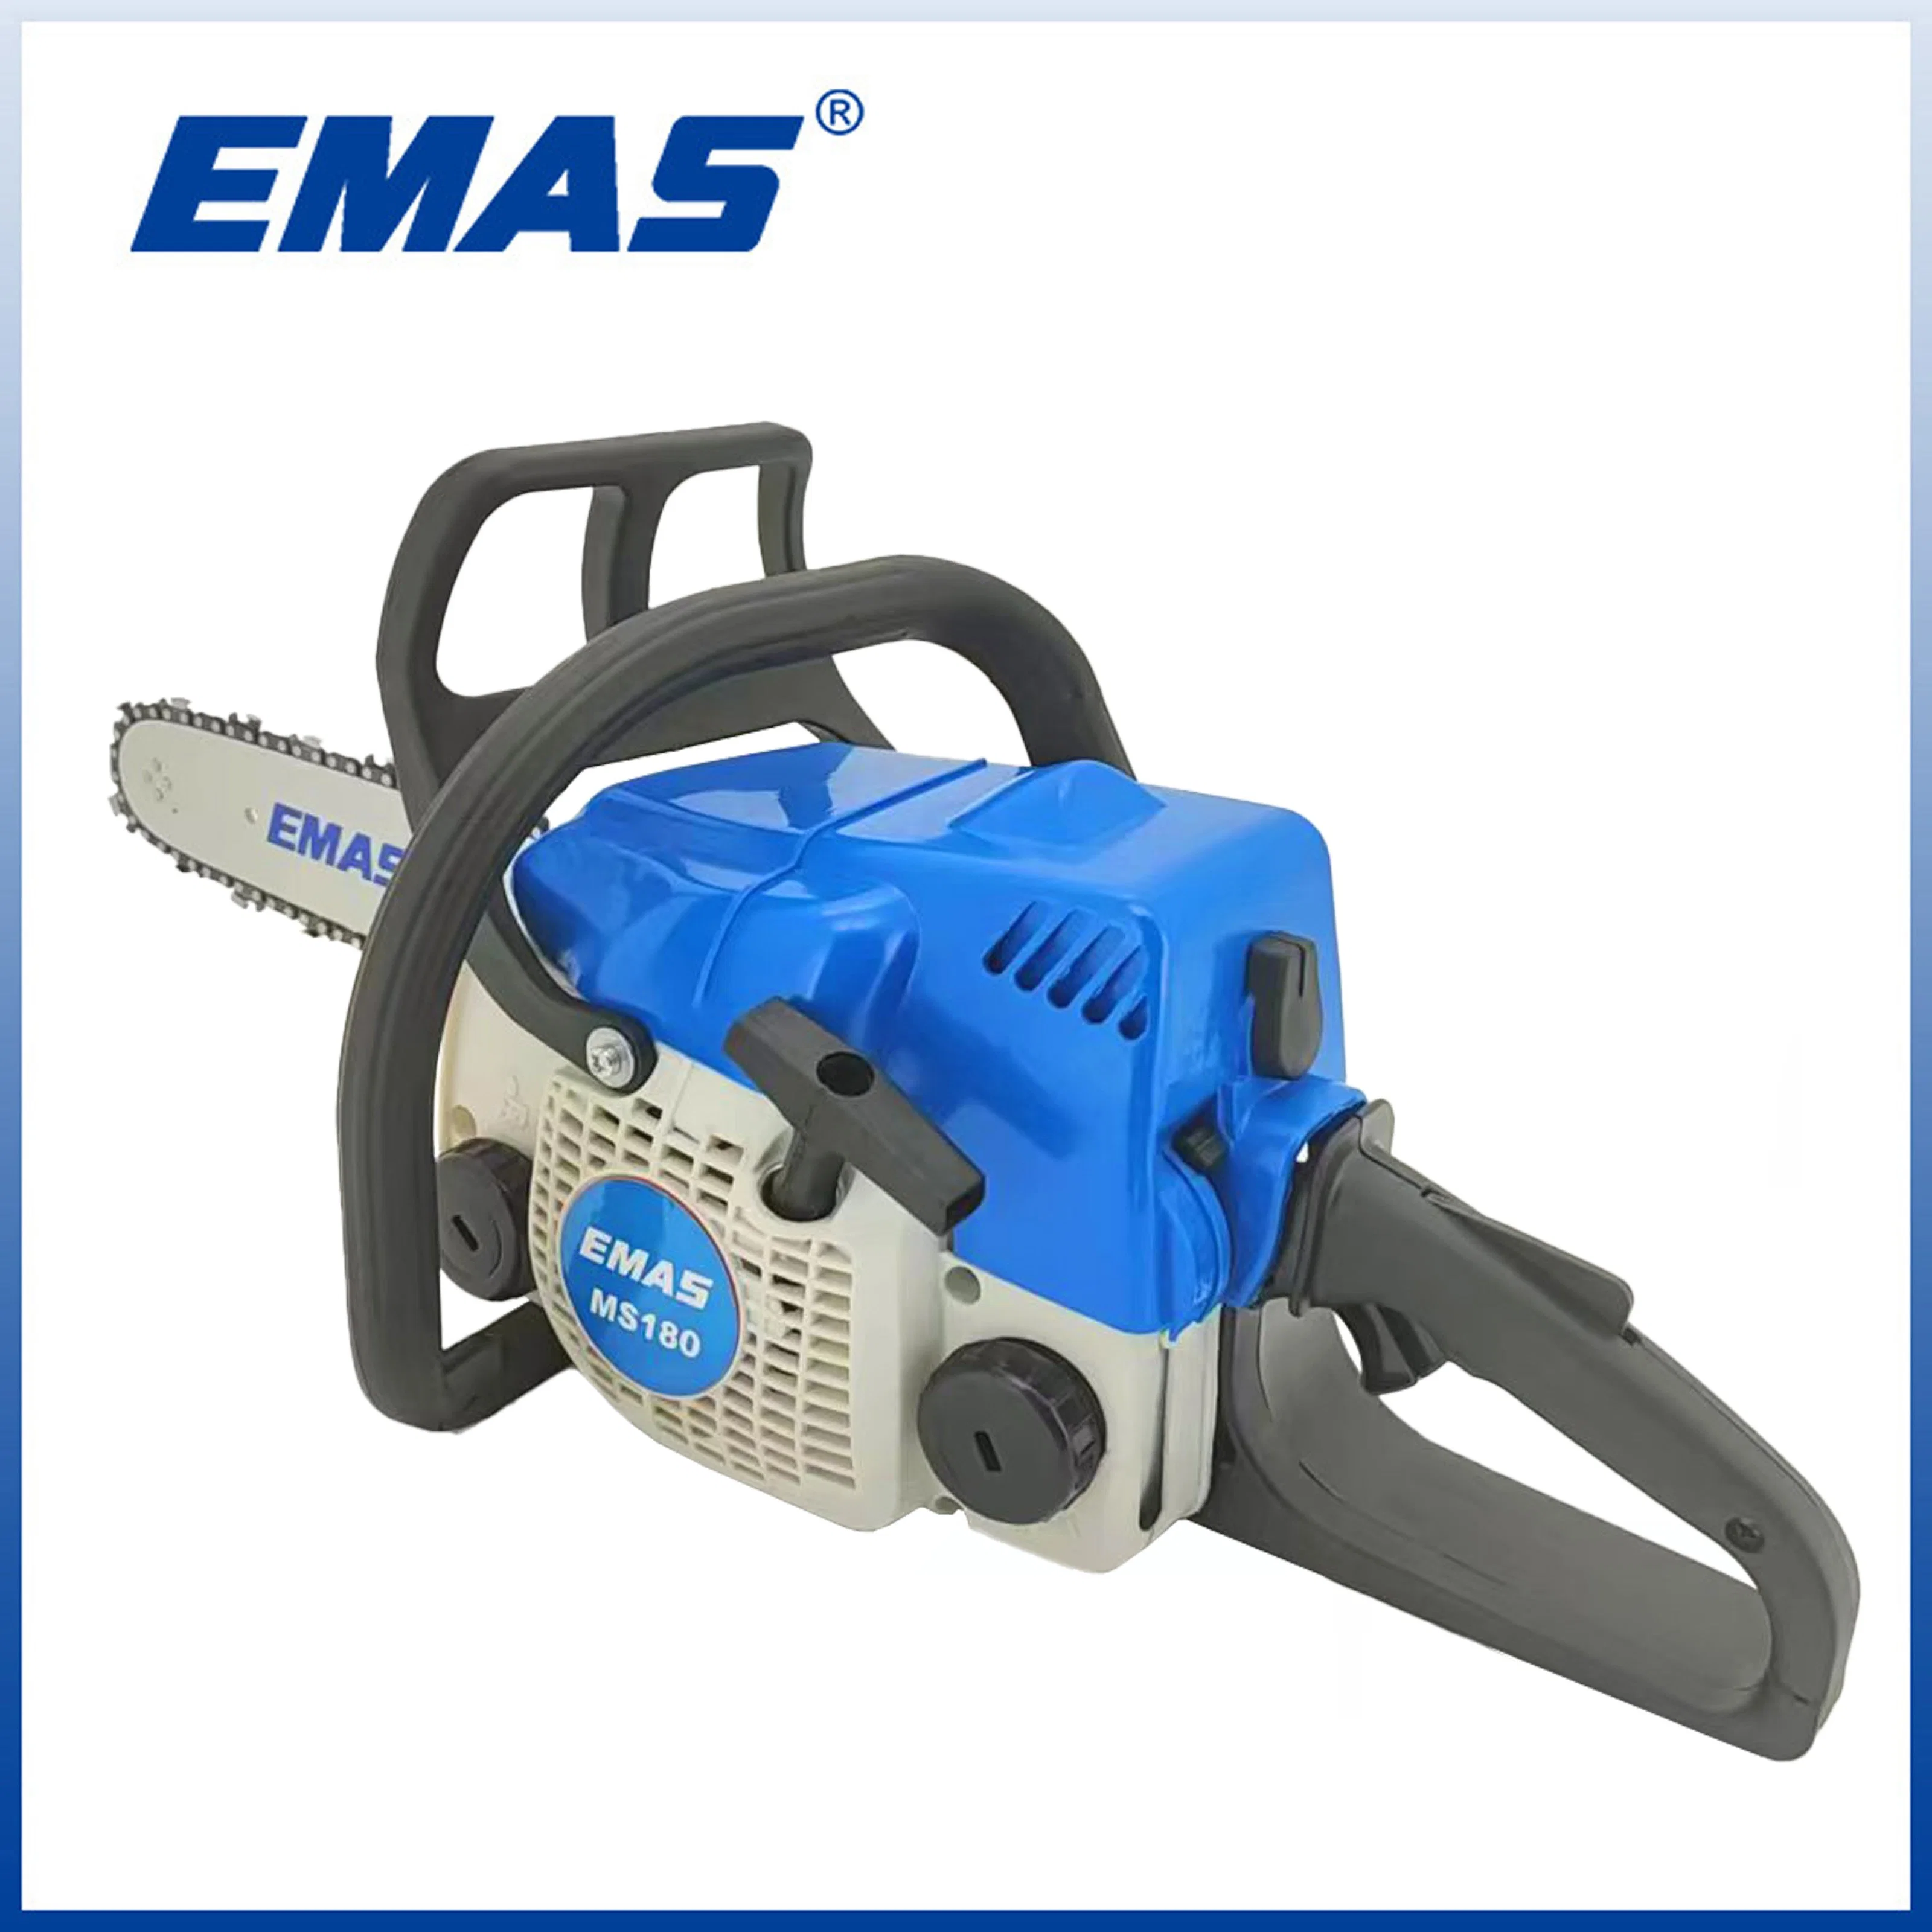 Emas Home Using Small Wood Cutting Machines 32cc Gasoline Chainsaw Est180